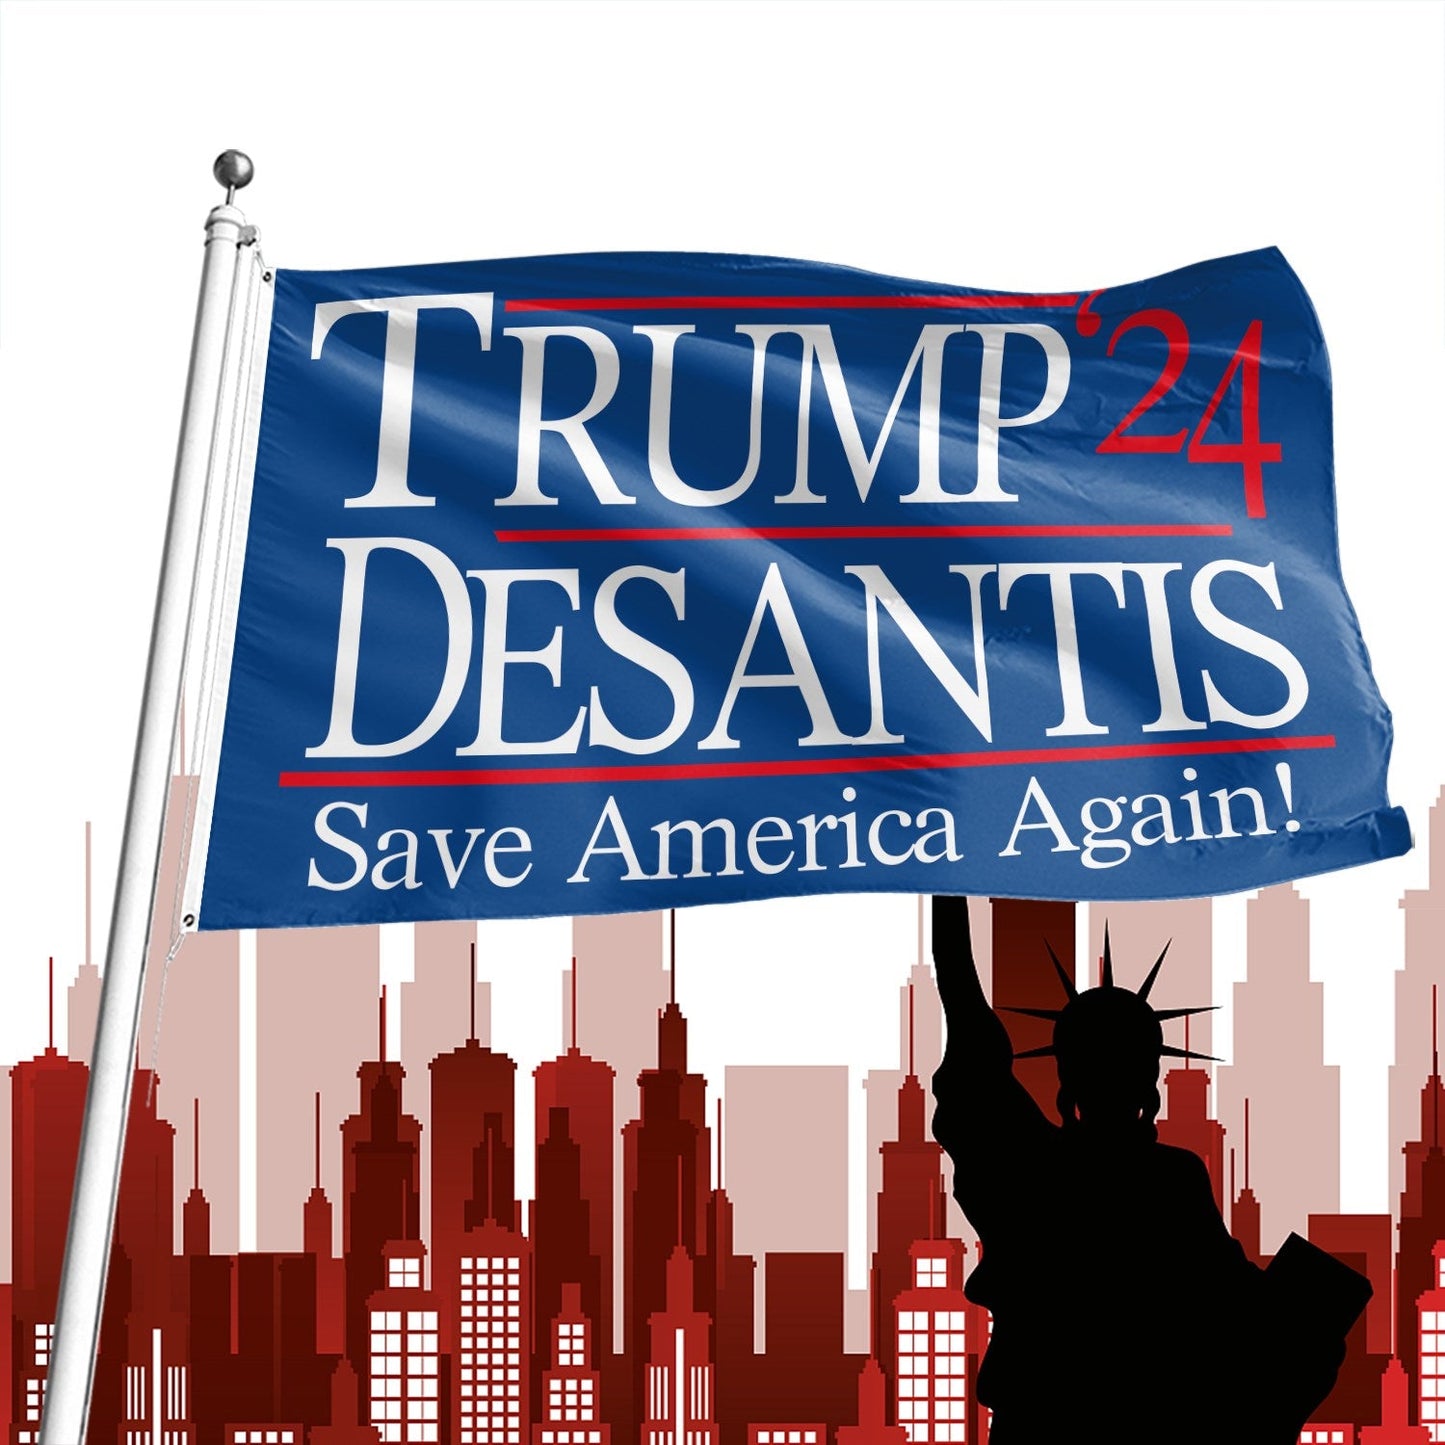 Save America Again Donald Trump Flag Trump Desantis 2024 3x5 Ft banner